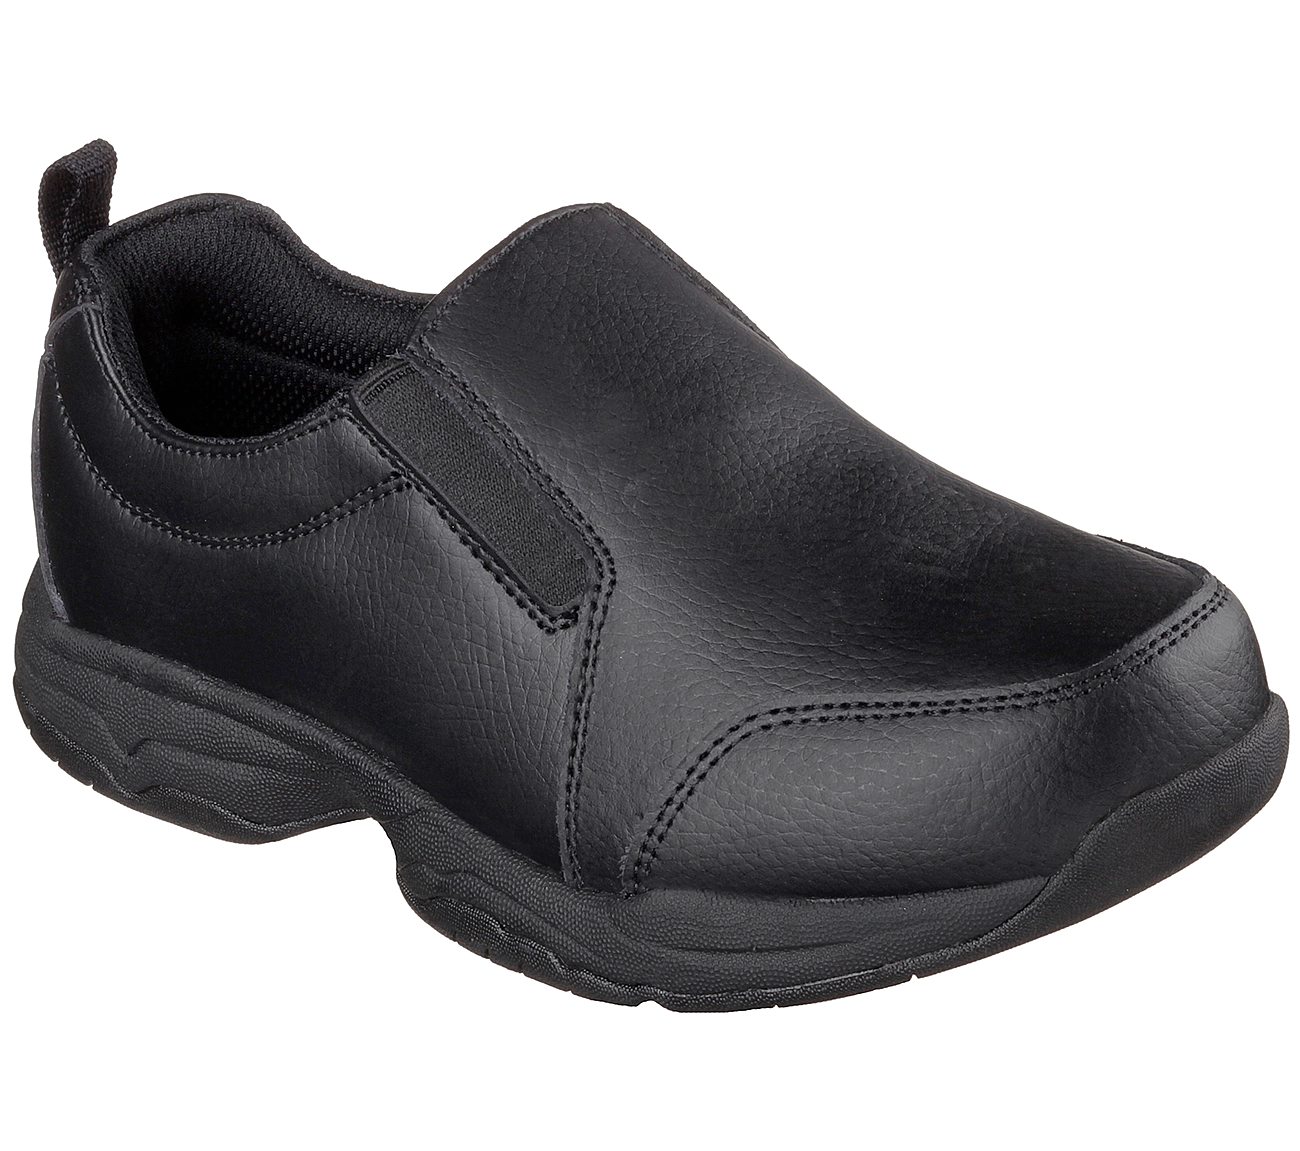 Buy SKECHERS Work Relaxed Fit: Felton - Calpet SR Work Shoes